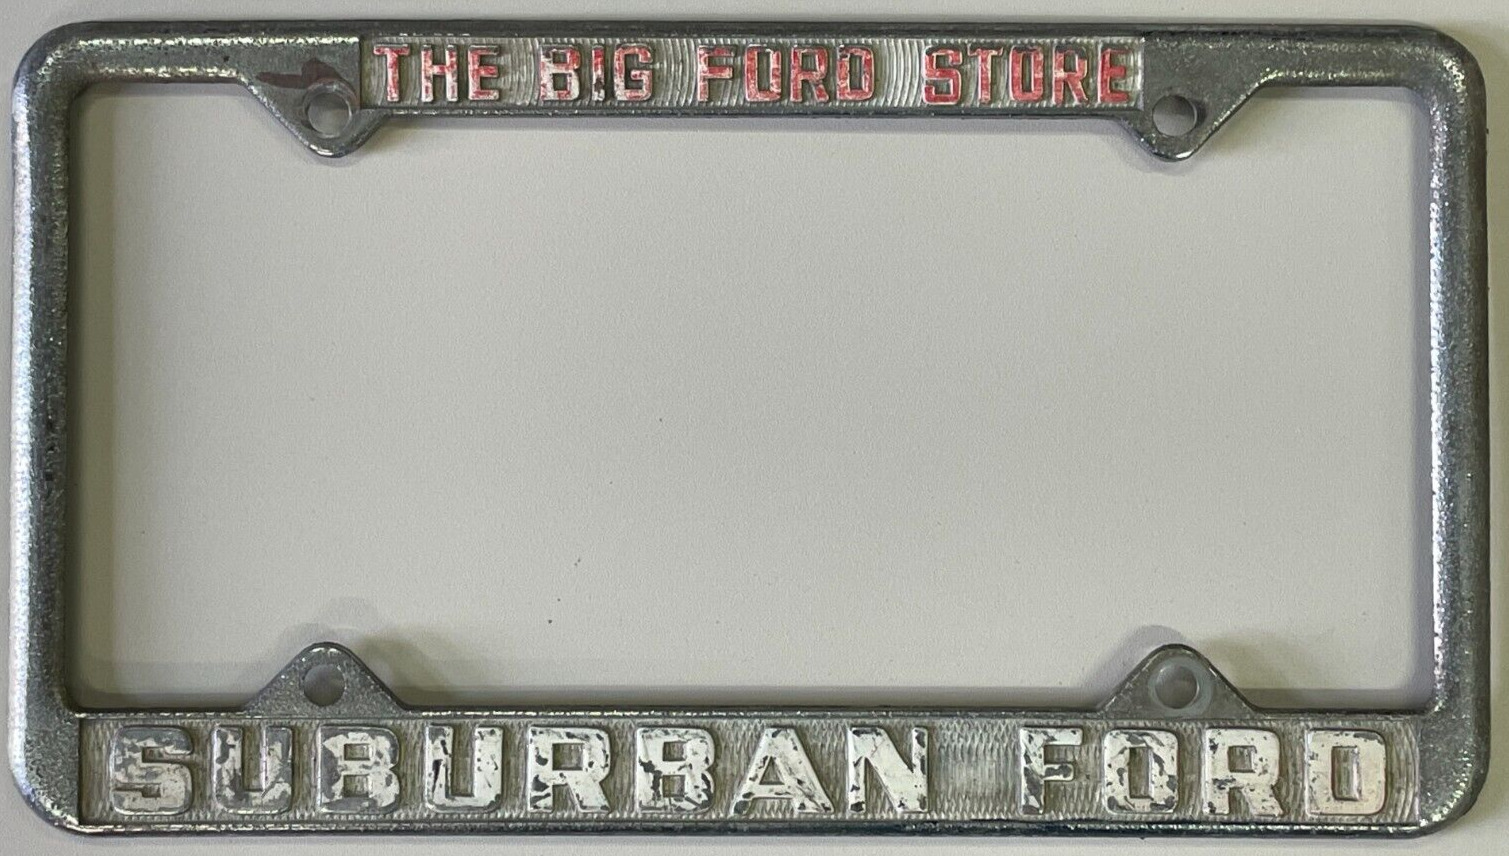 Suburban Ford The Big Ford Store Sacramento CA Vintage Metal License Plate Frame